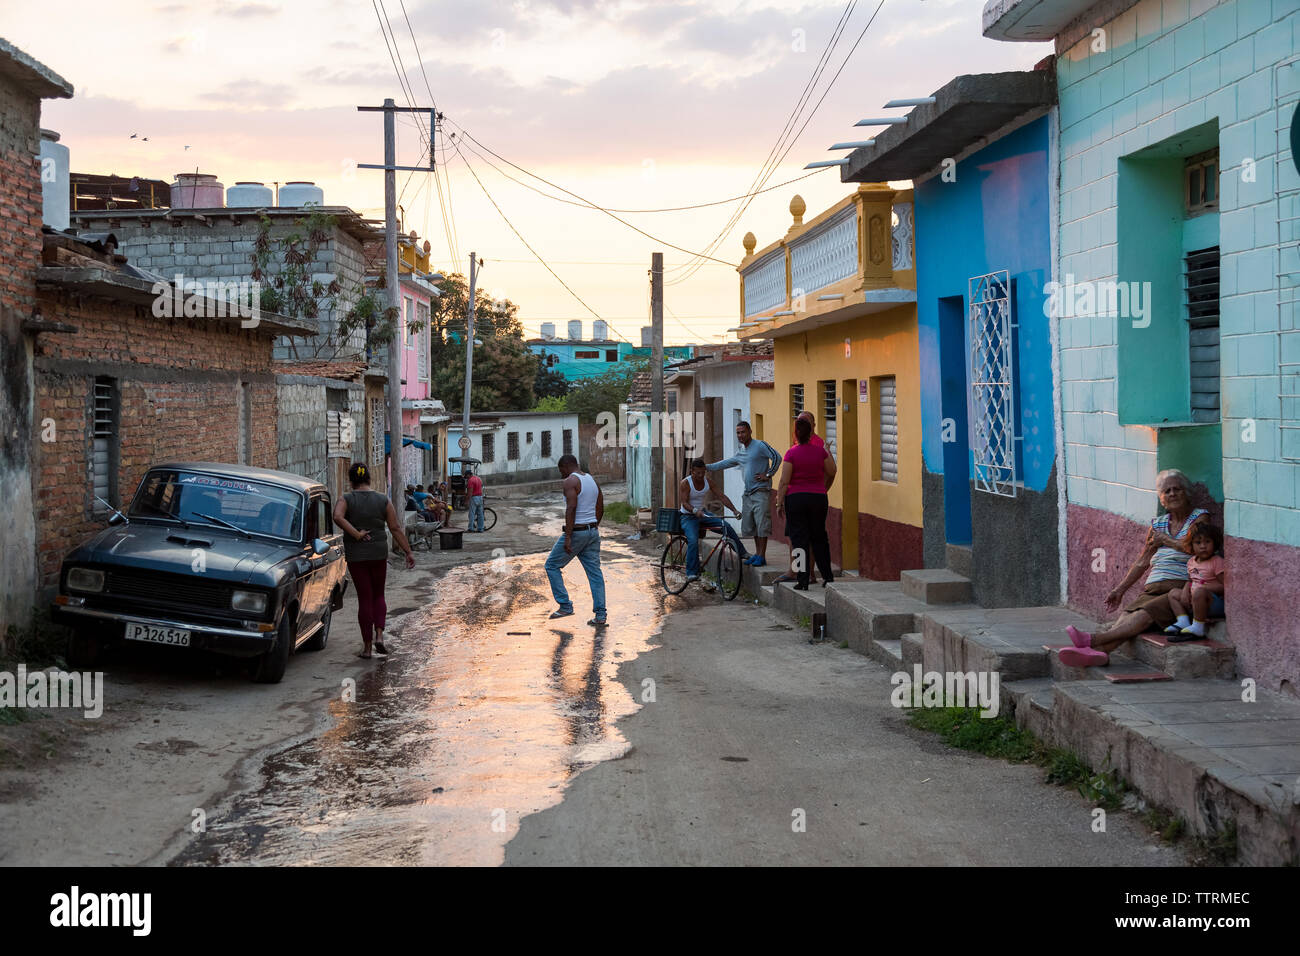 Real Life street scene in Trinidad, Cuba. 2017. Stock Photo